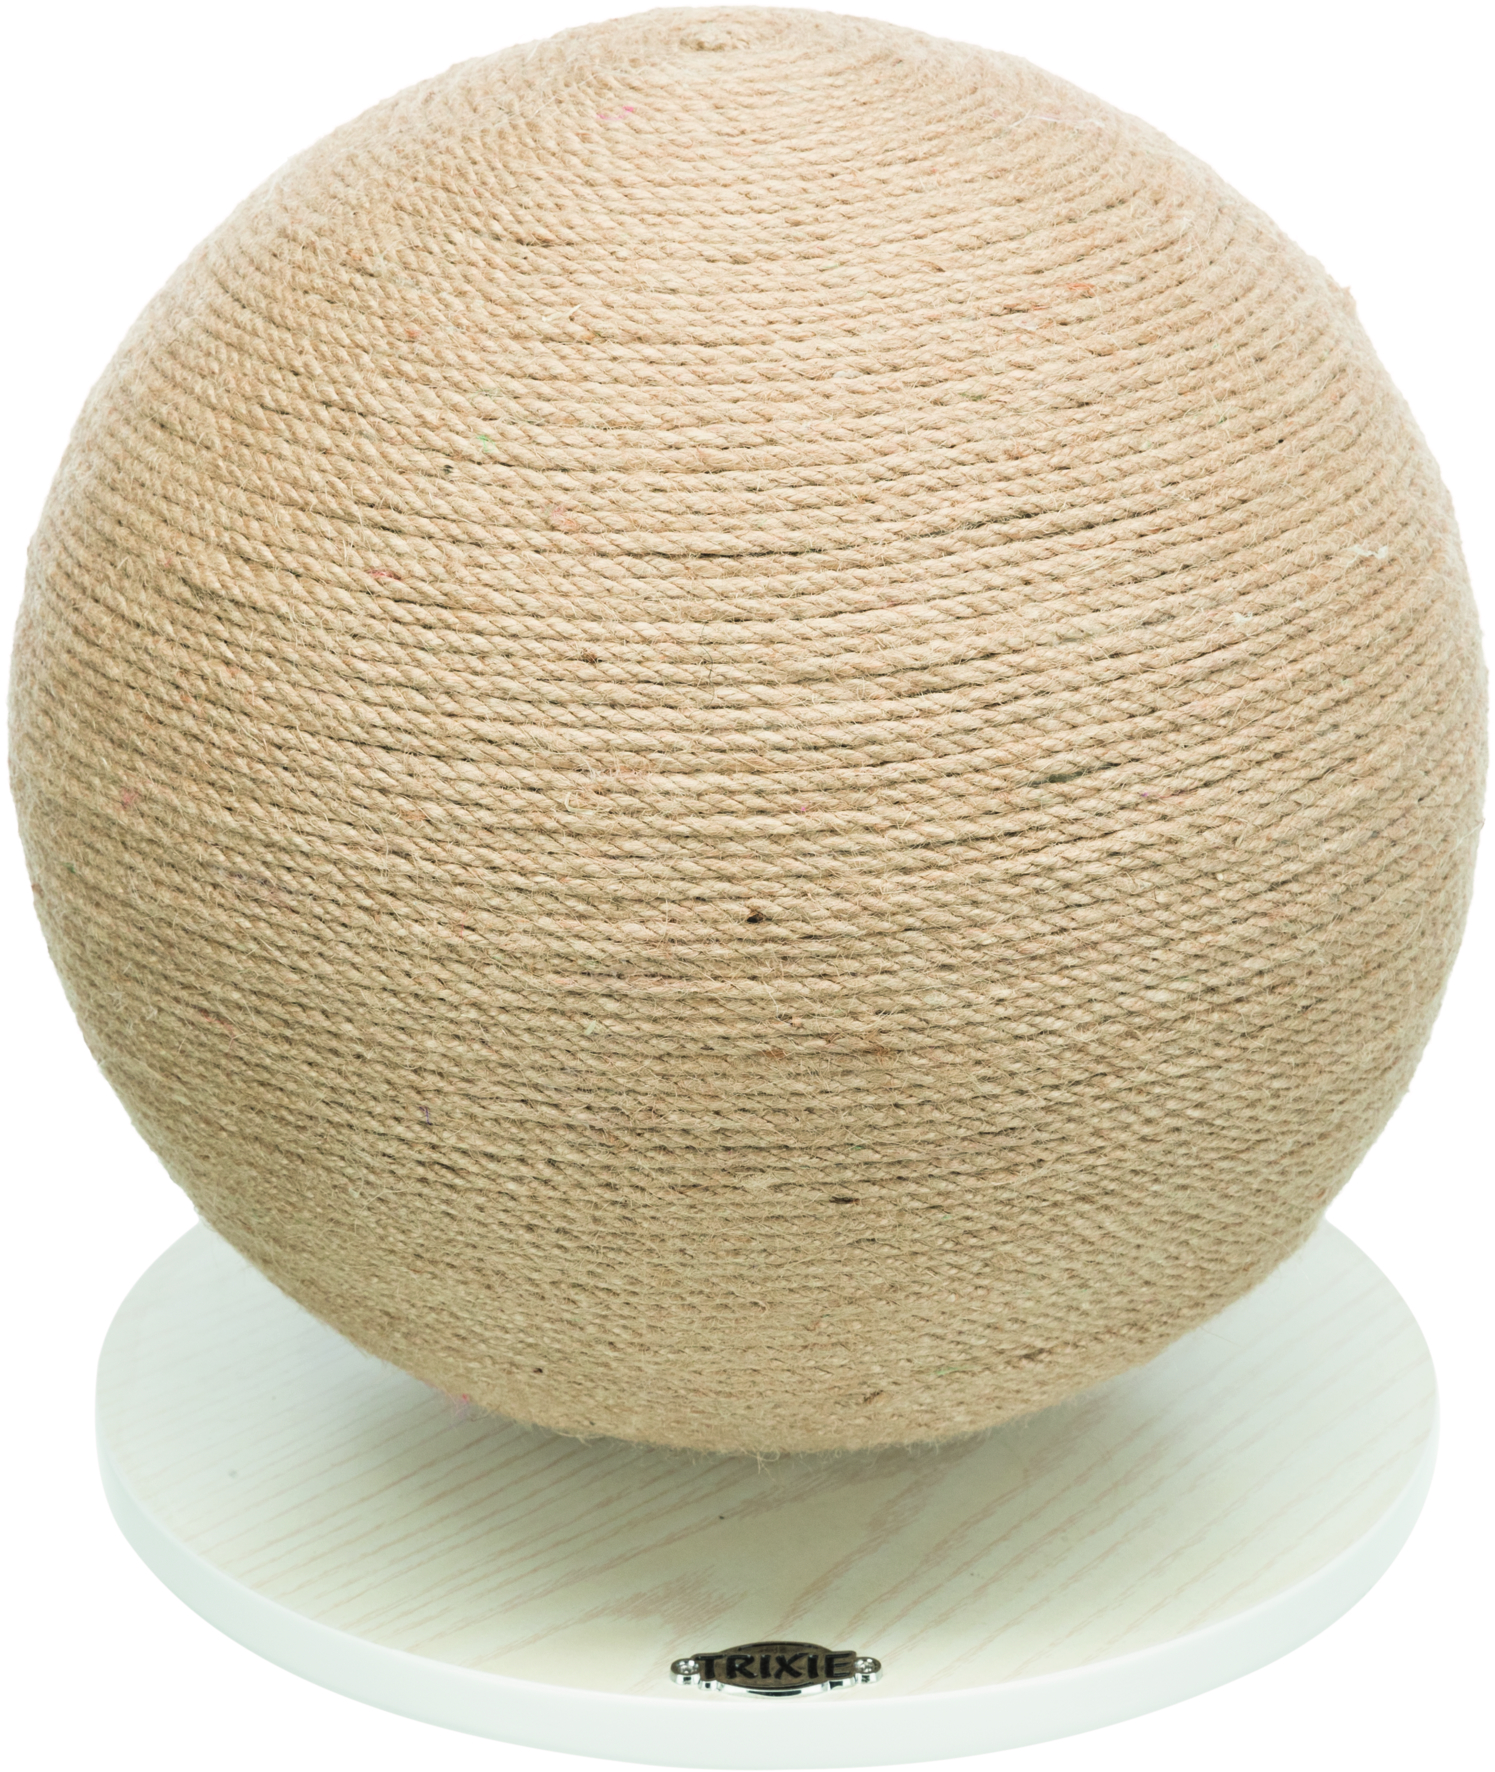 Trixie Kratzball auf Platte Ø 29 x 31 cm, natur